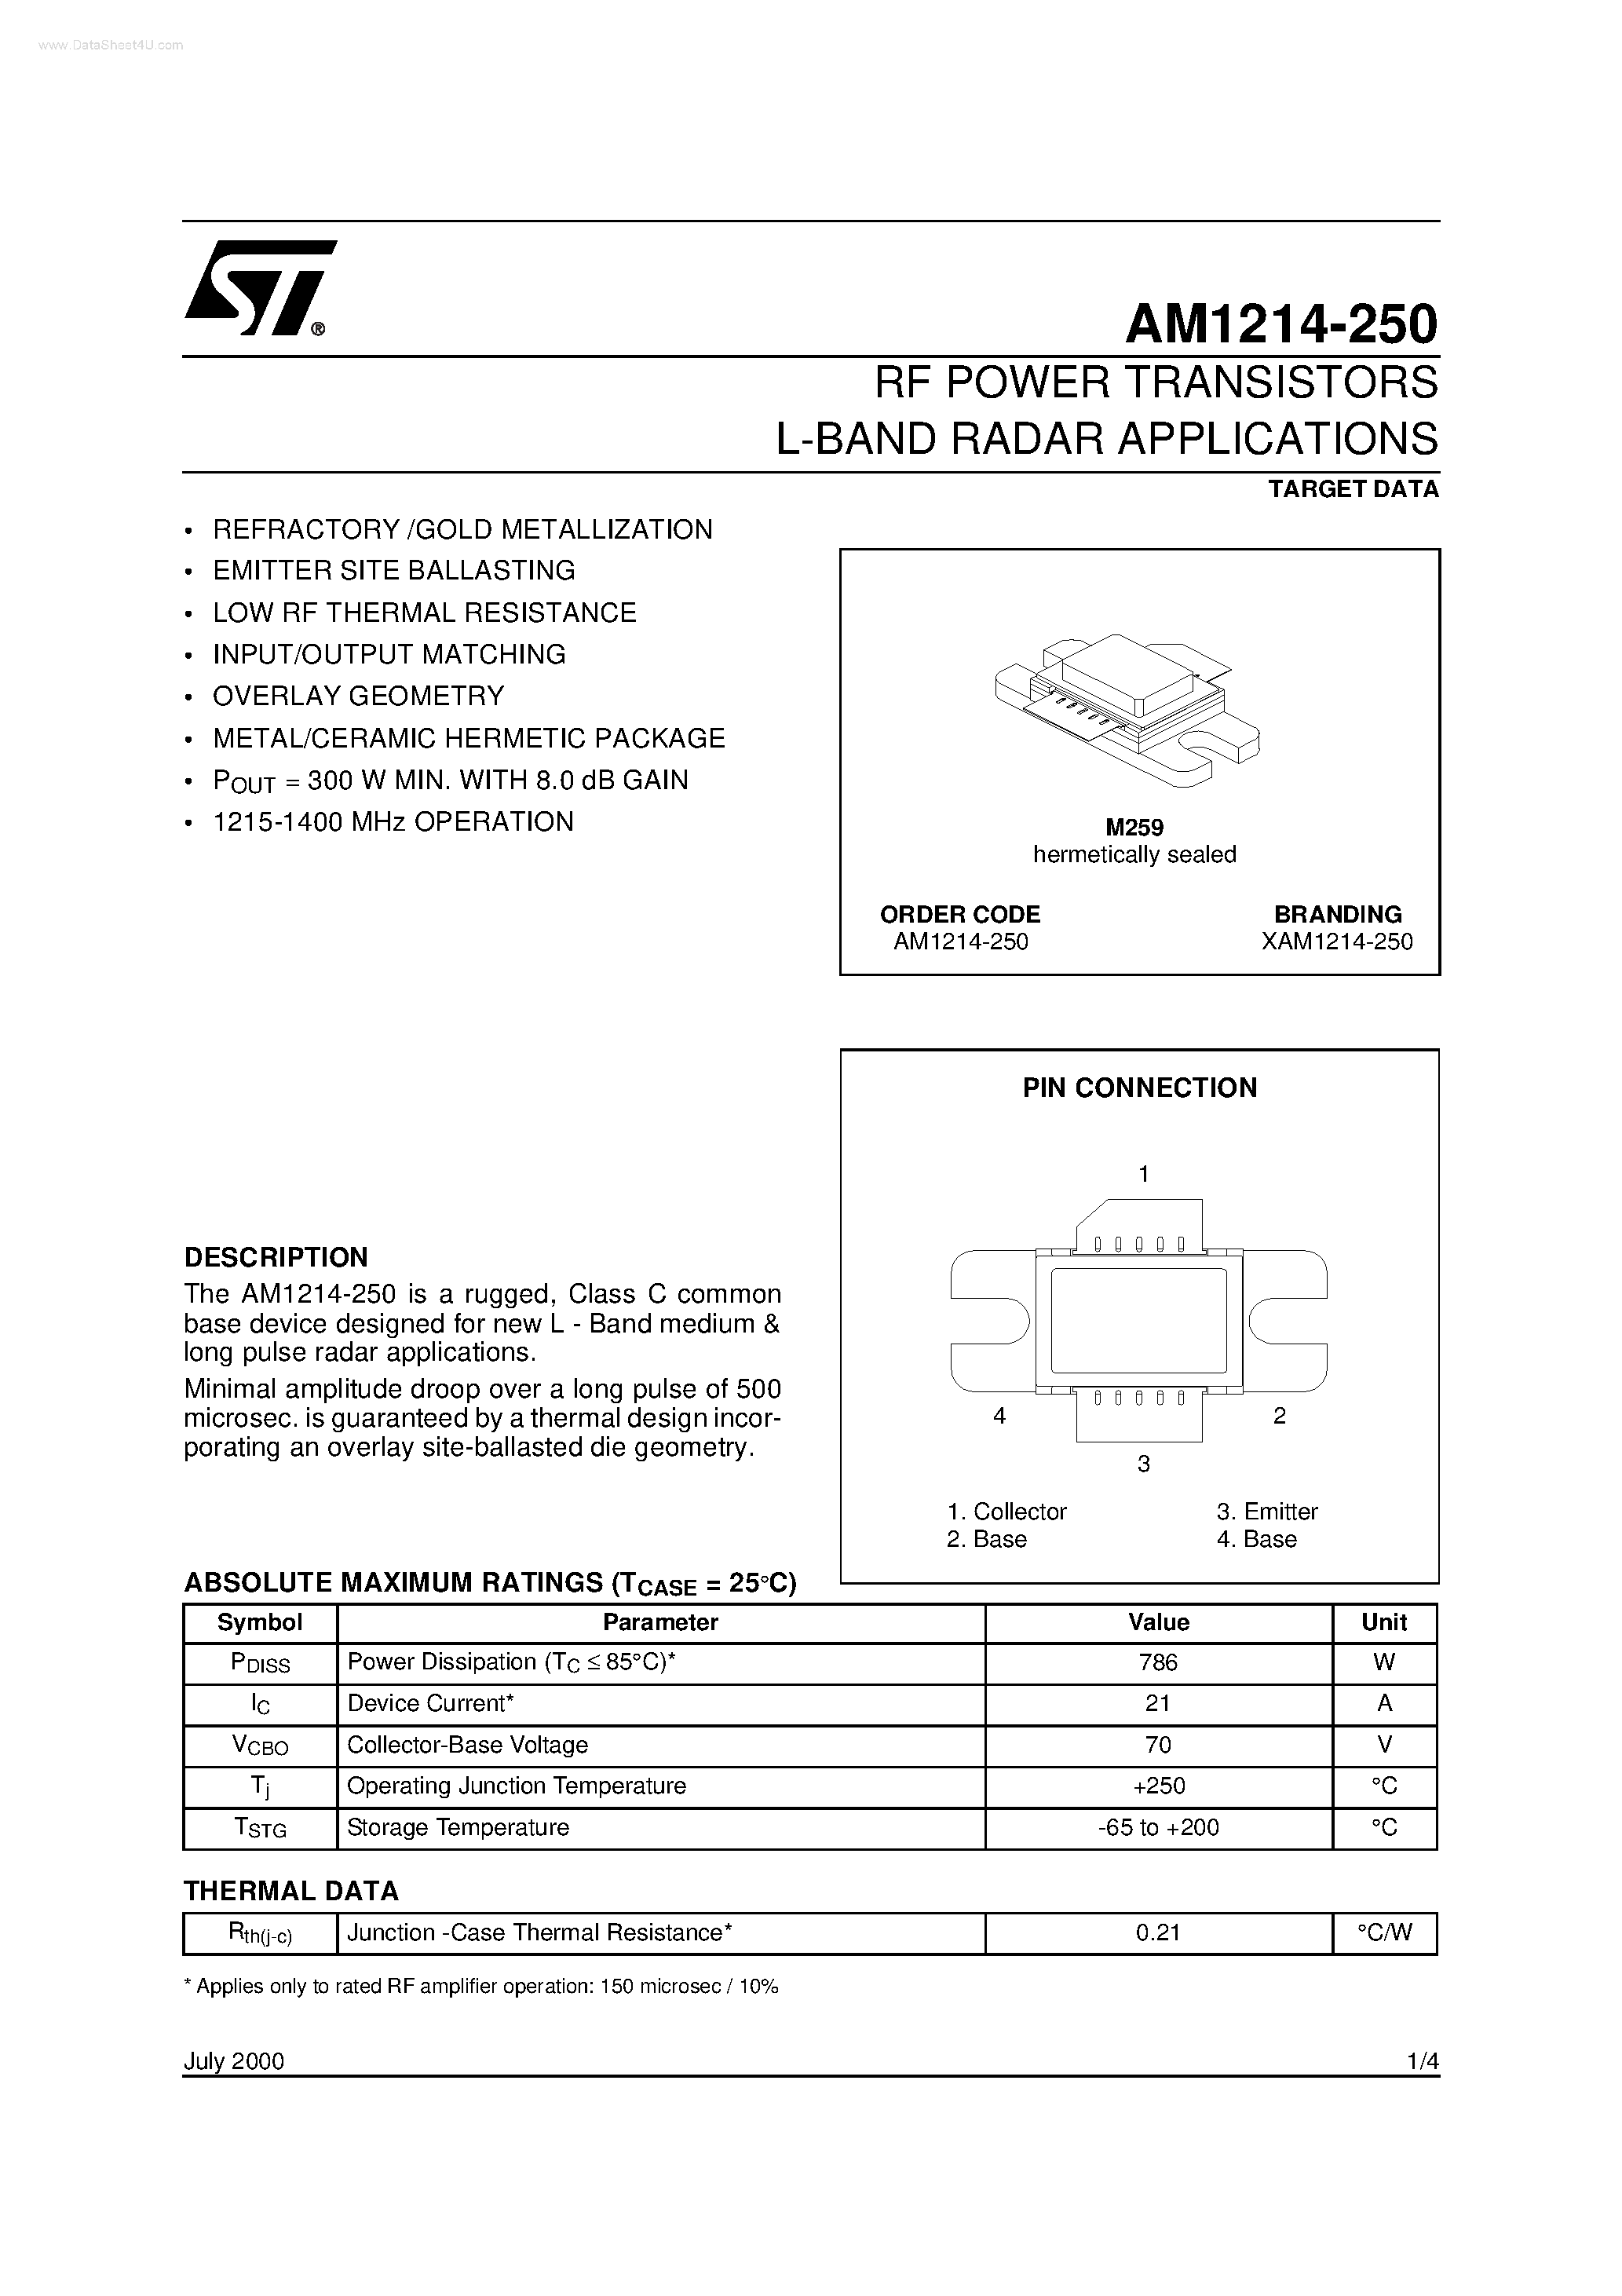 Datasheet AM1214-250 - RF POWER TRANSISTORS L-BAND RADAR APPLICATIONS page 1